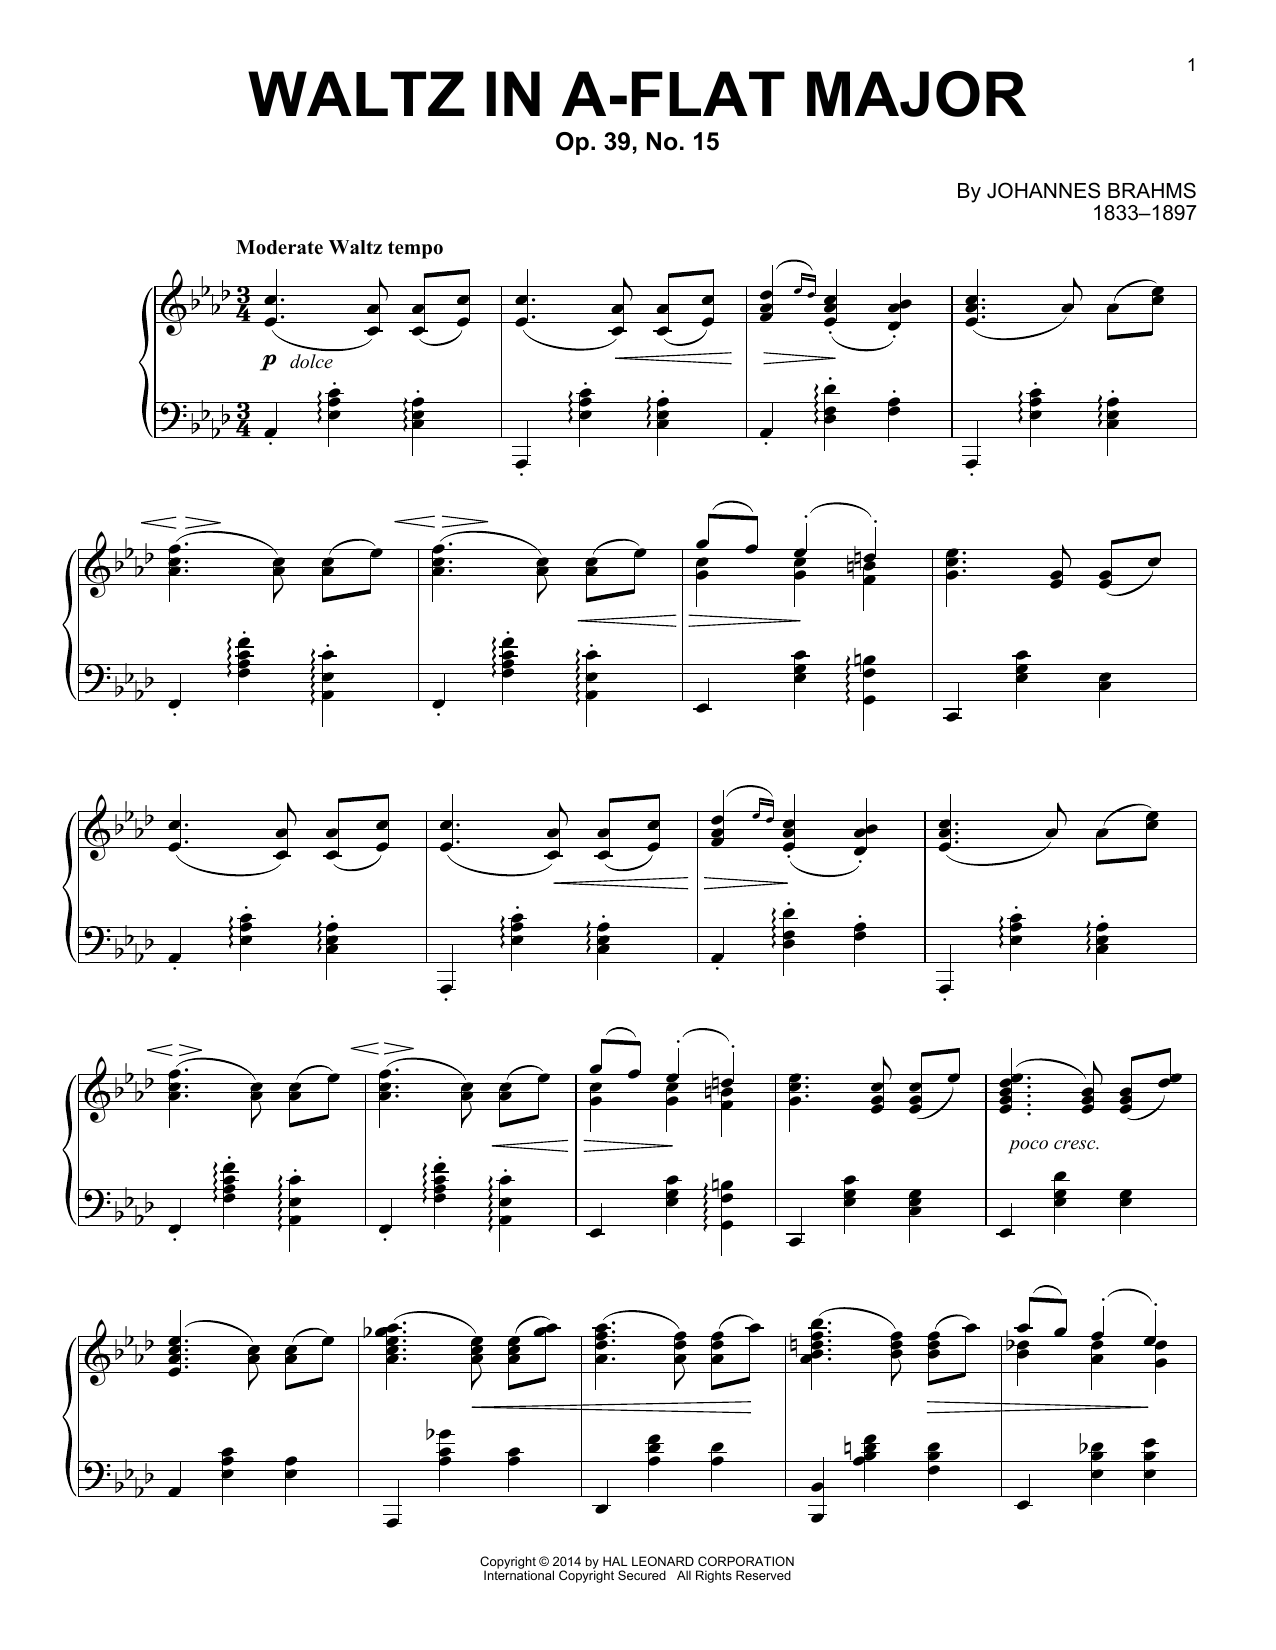 Johannes Brahms Waltz In A-Flat Major, Op. 39, No. 15 sheet music notes printable PDF score